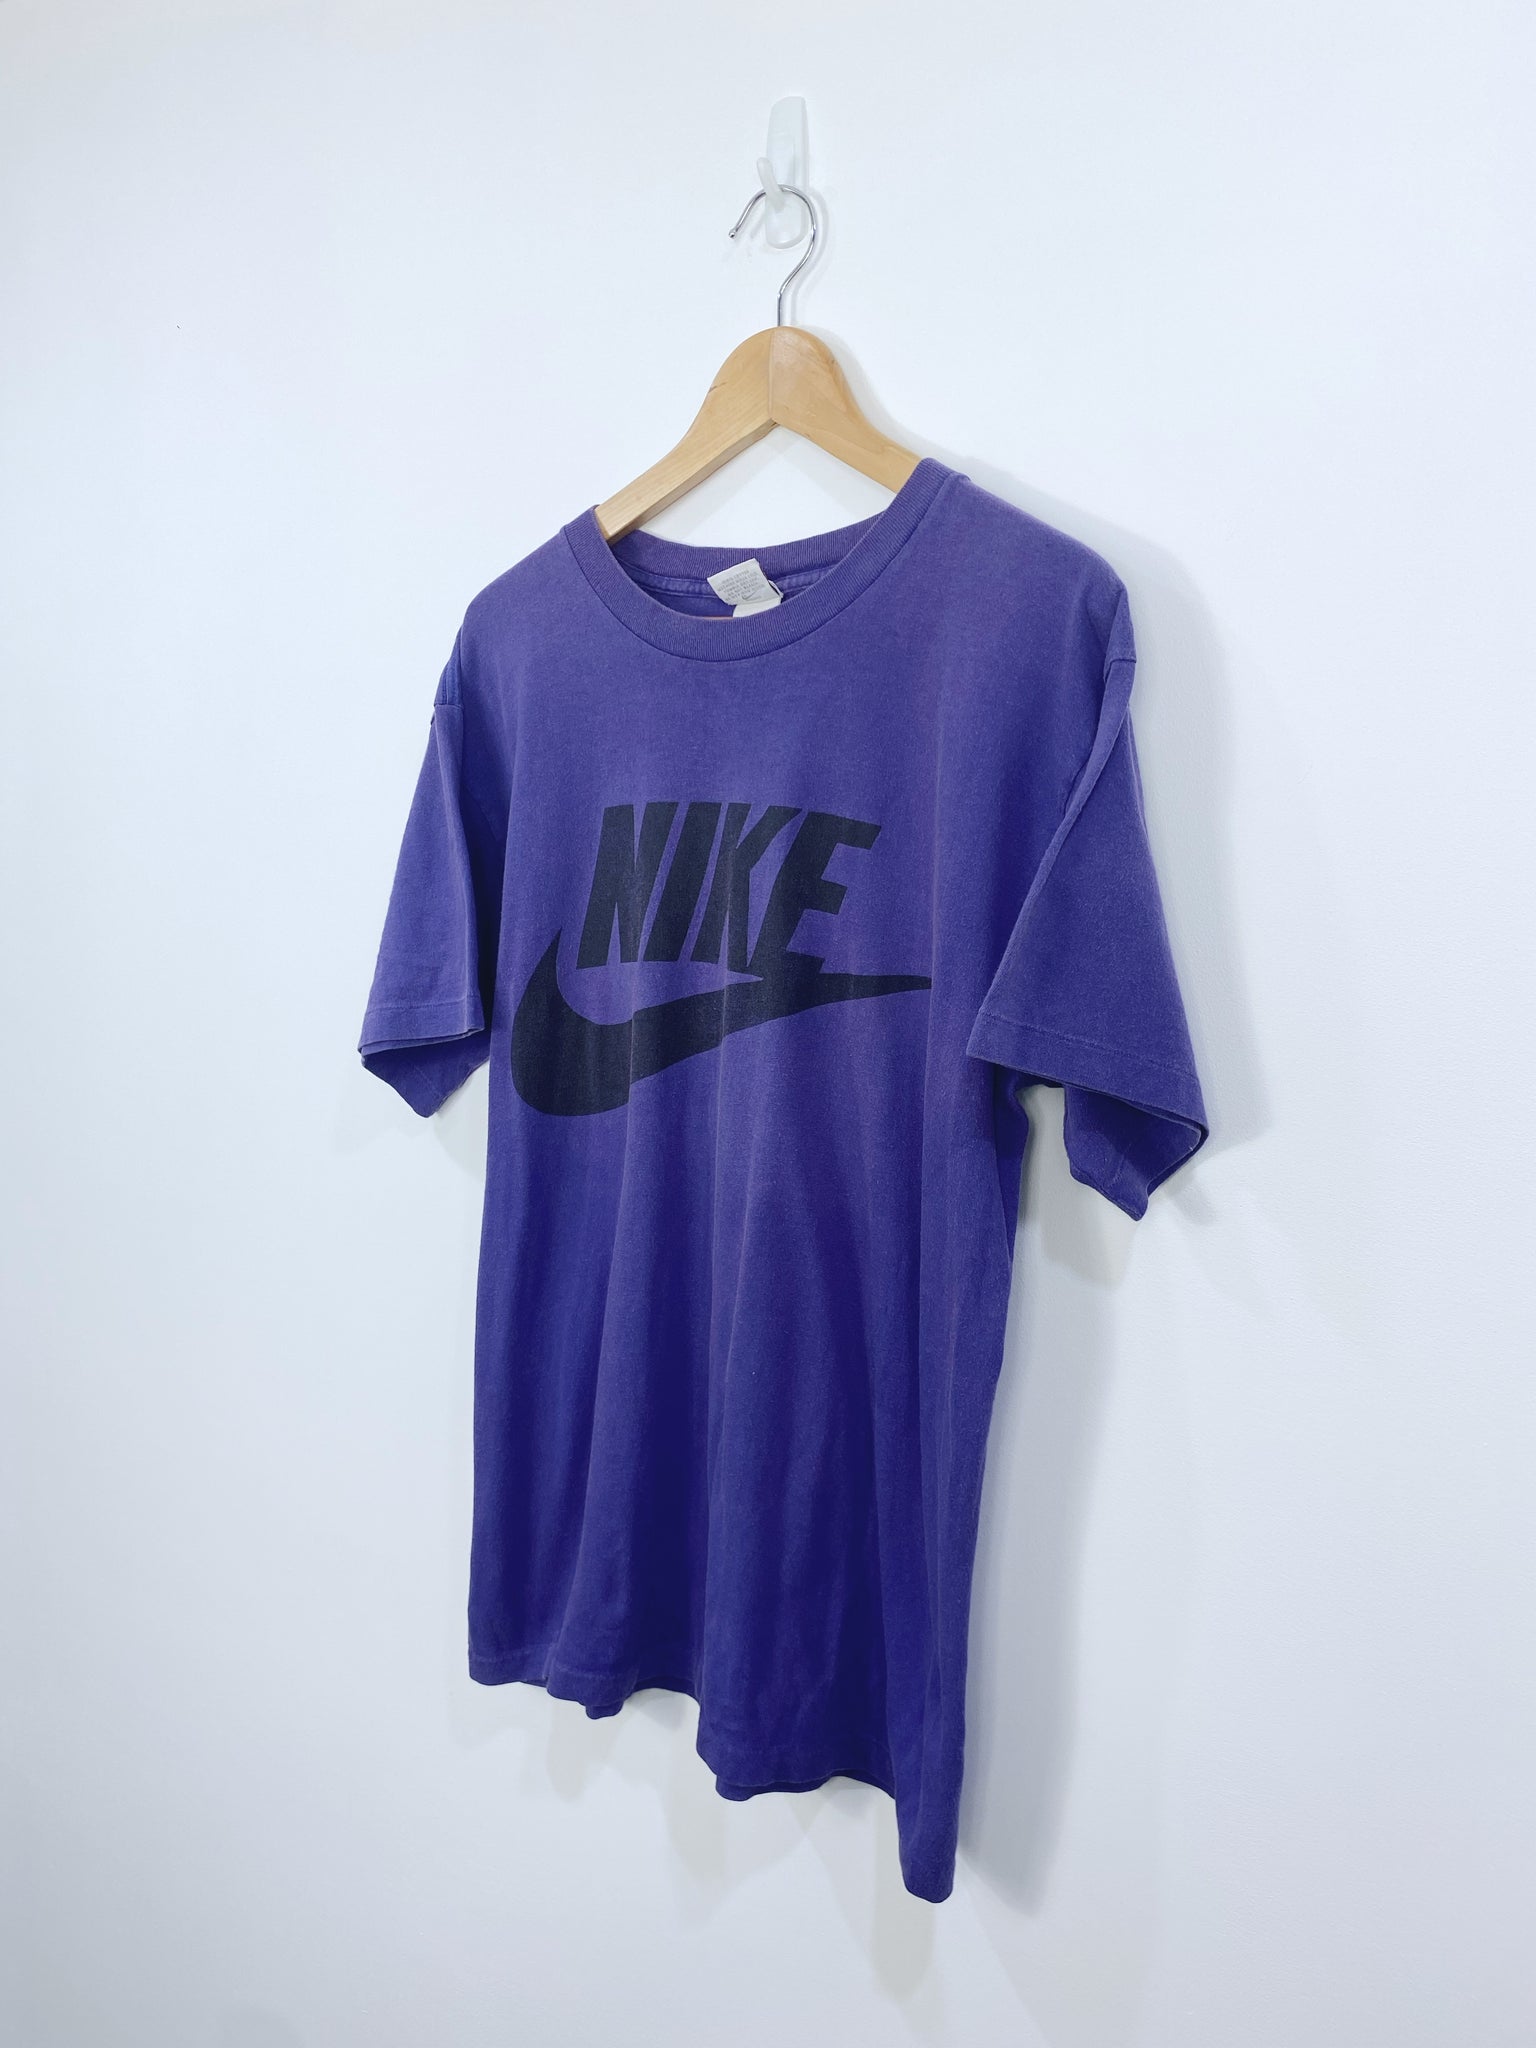 Vintage 90s Nike T-shirt M